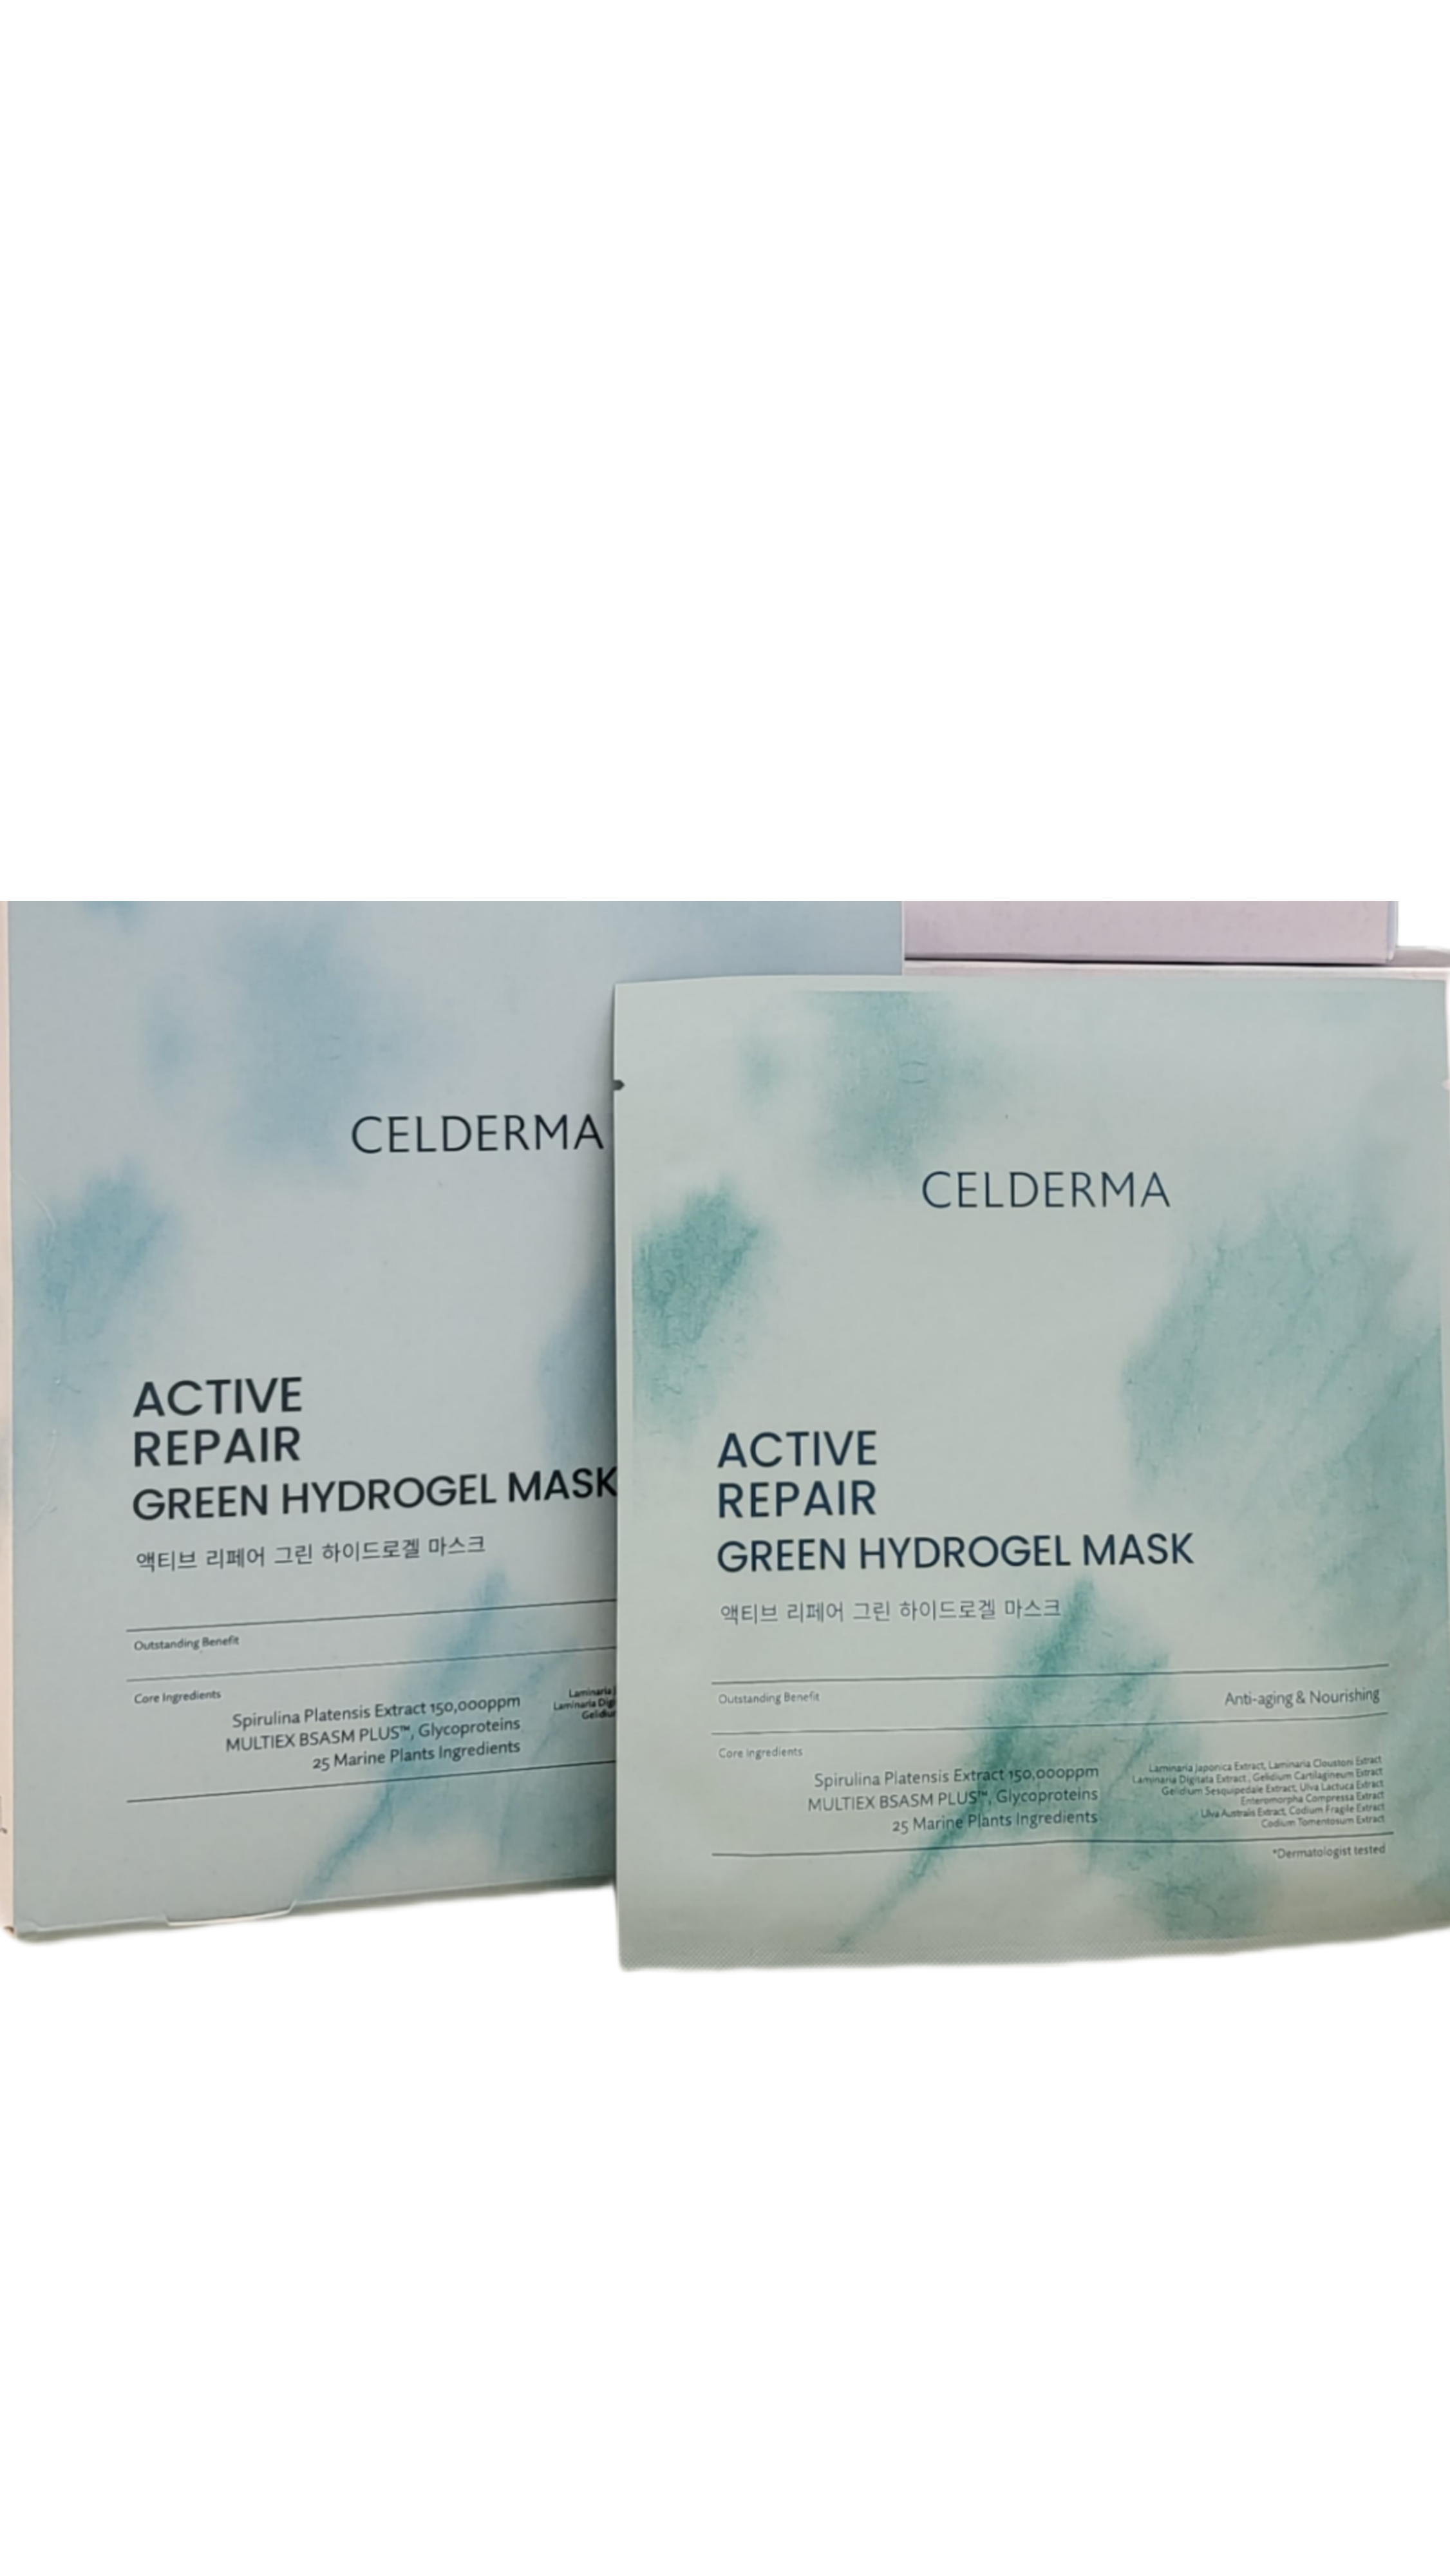 CELDERMA Active Repair Green Hydrogel Mask 30g (1box x 4 Sheets)